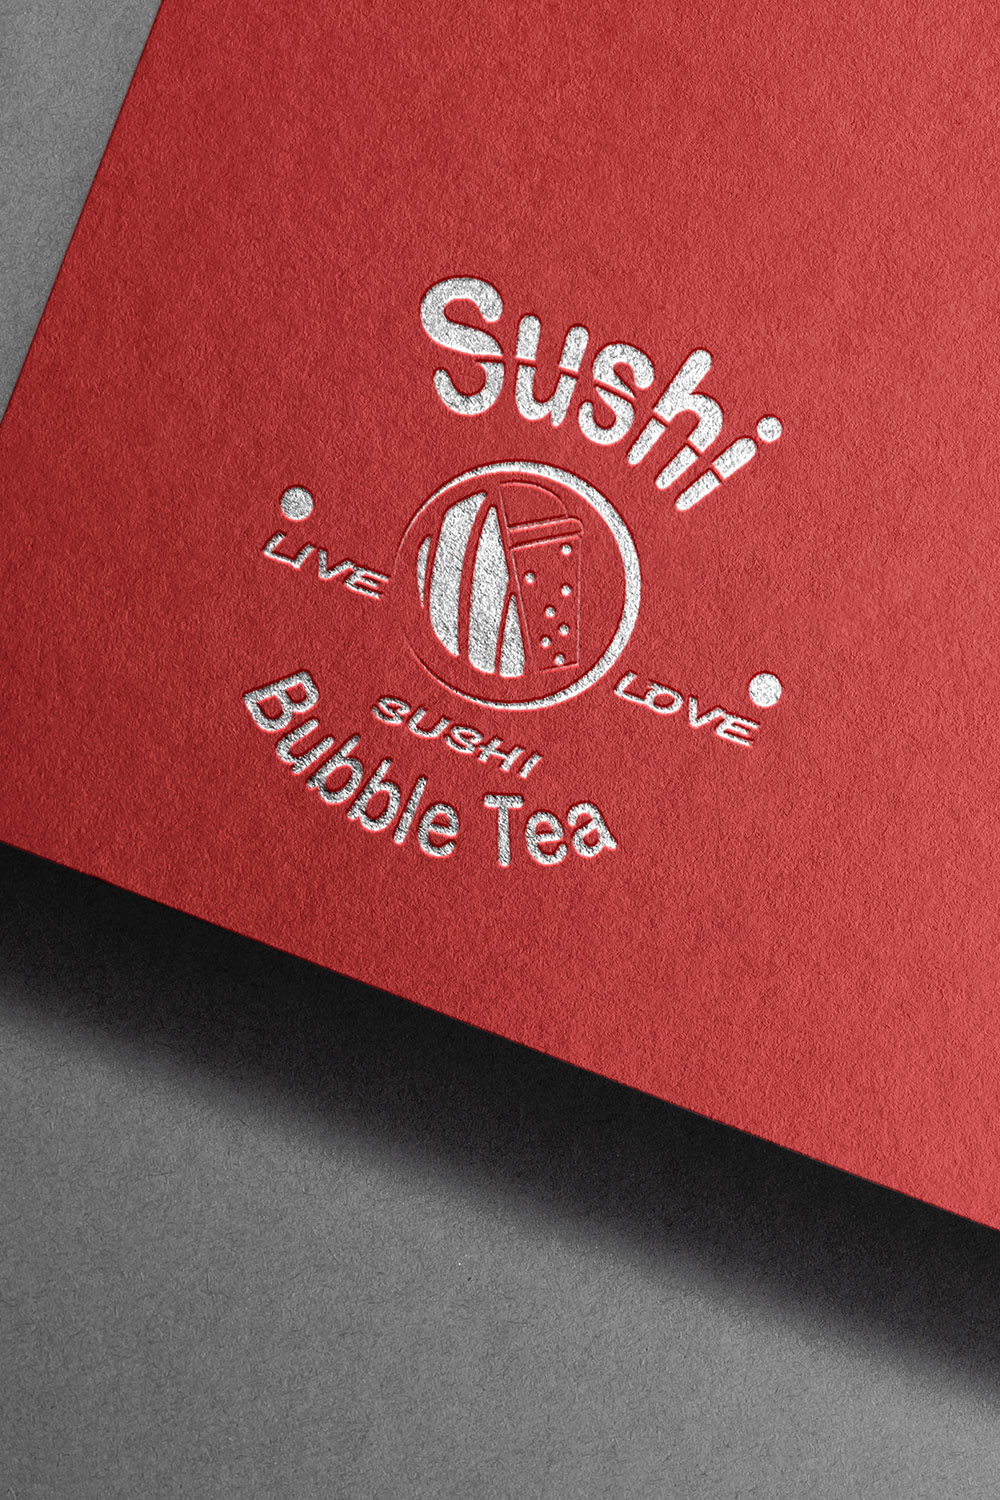 sushi restaurant logo and tea bubble vector pinterest preview image.